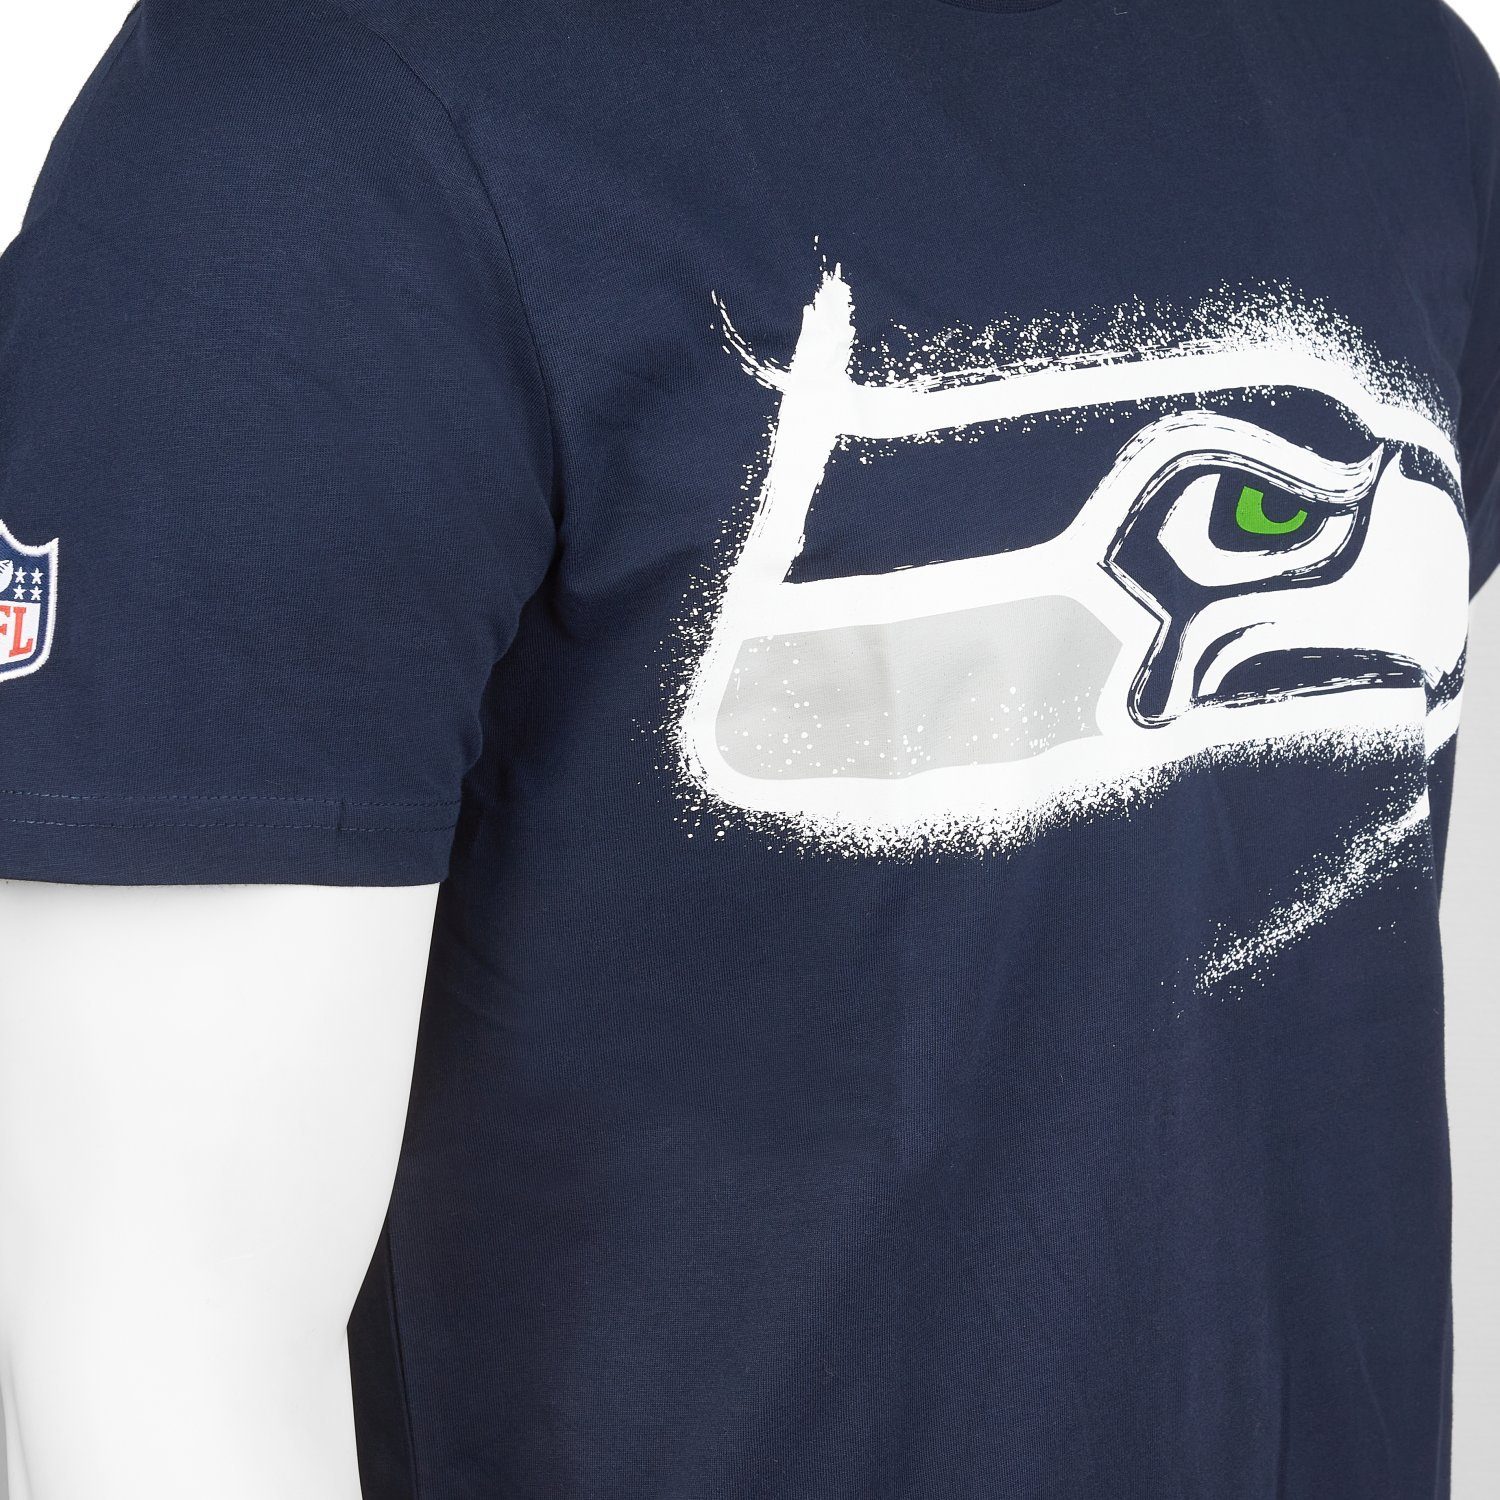 SPRAY Seattle Packer NFL Seahawks Seahawks Era Bucs Chiefs Print-Shirt New Patriots